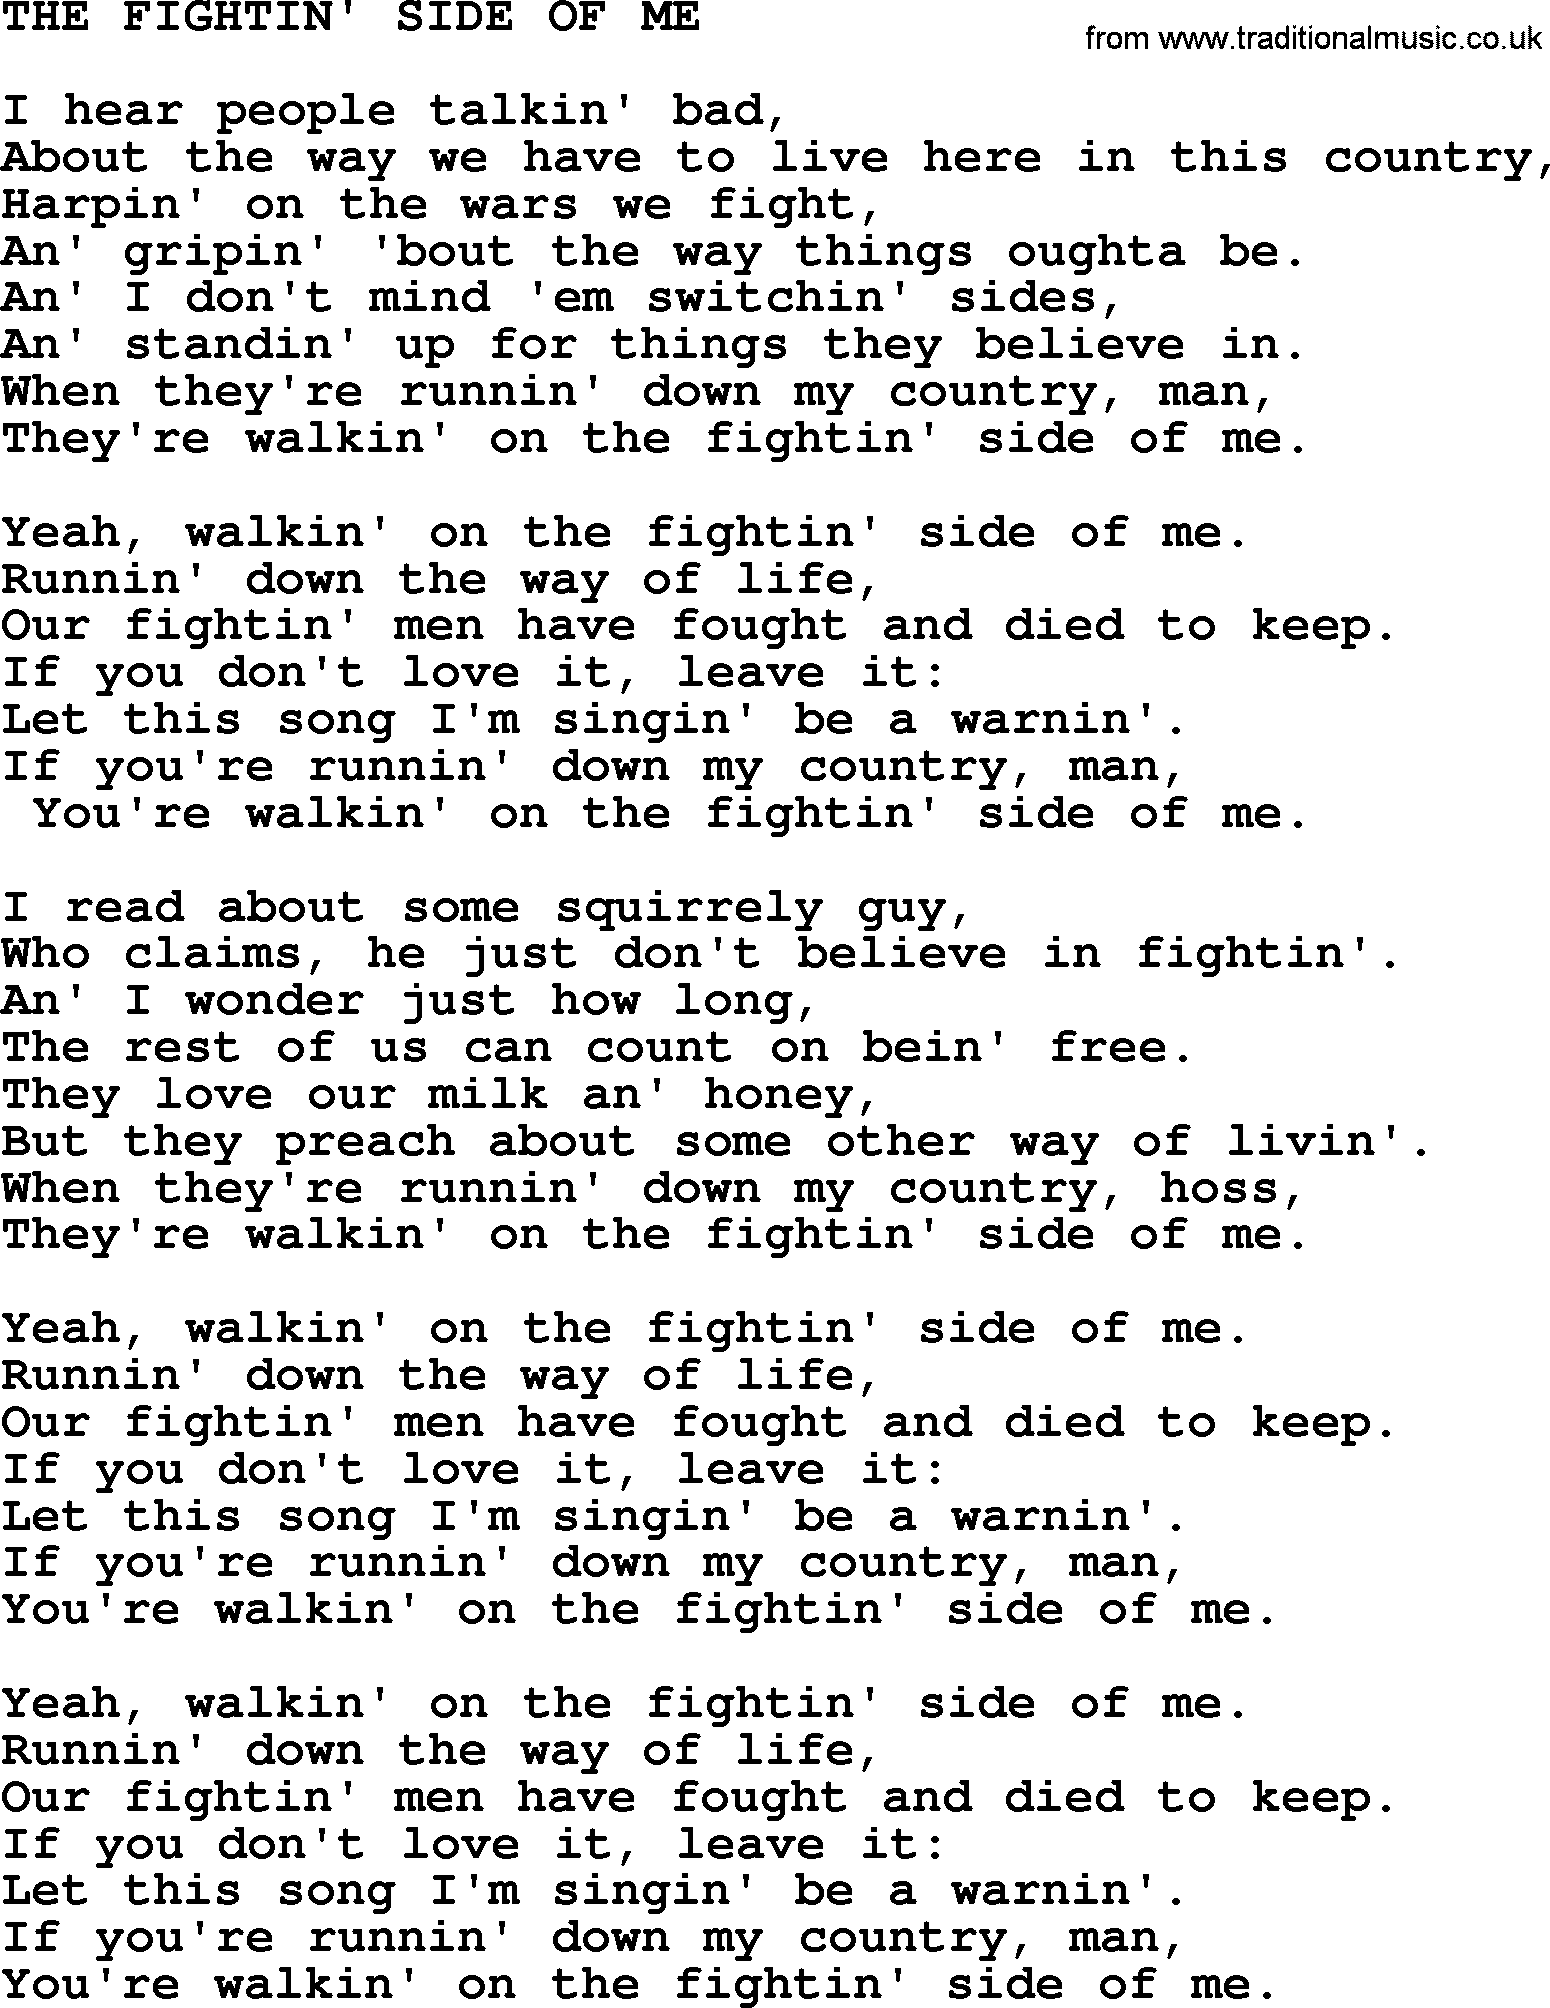 Merle Haggard song: The Fightin' Side Of Me, lyrics.